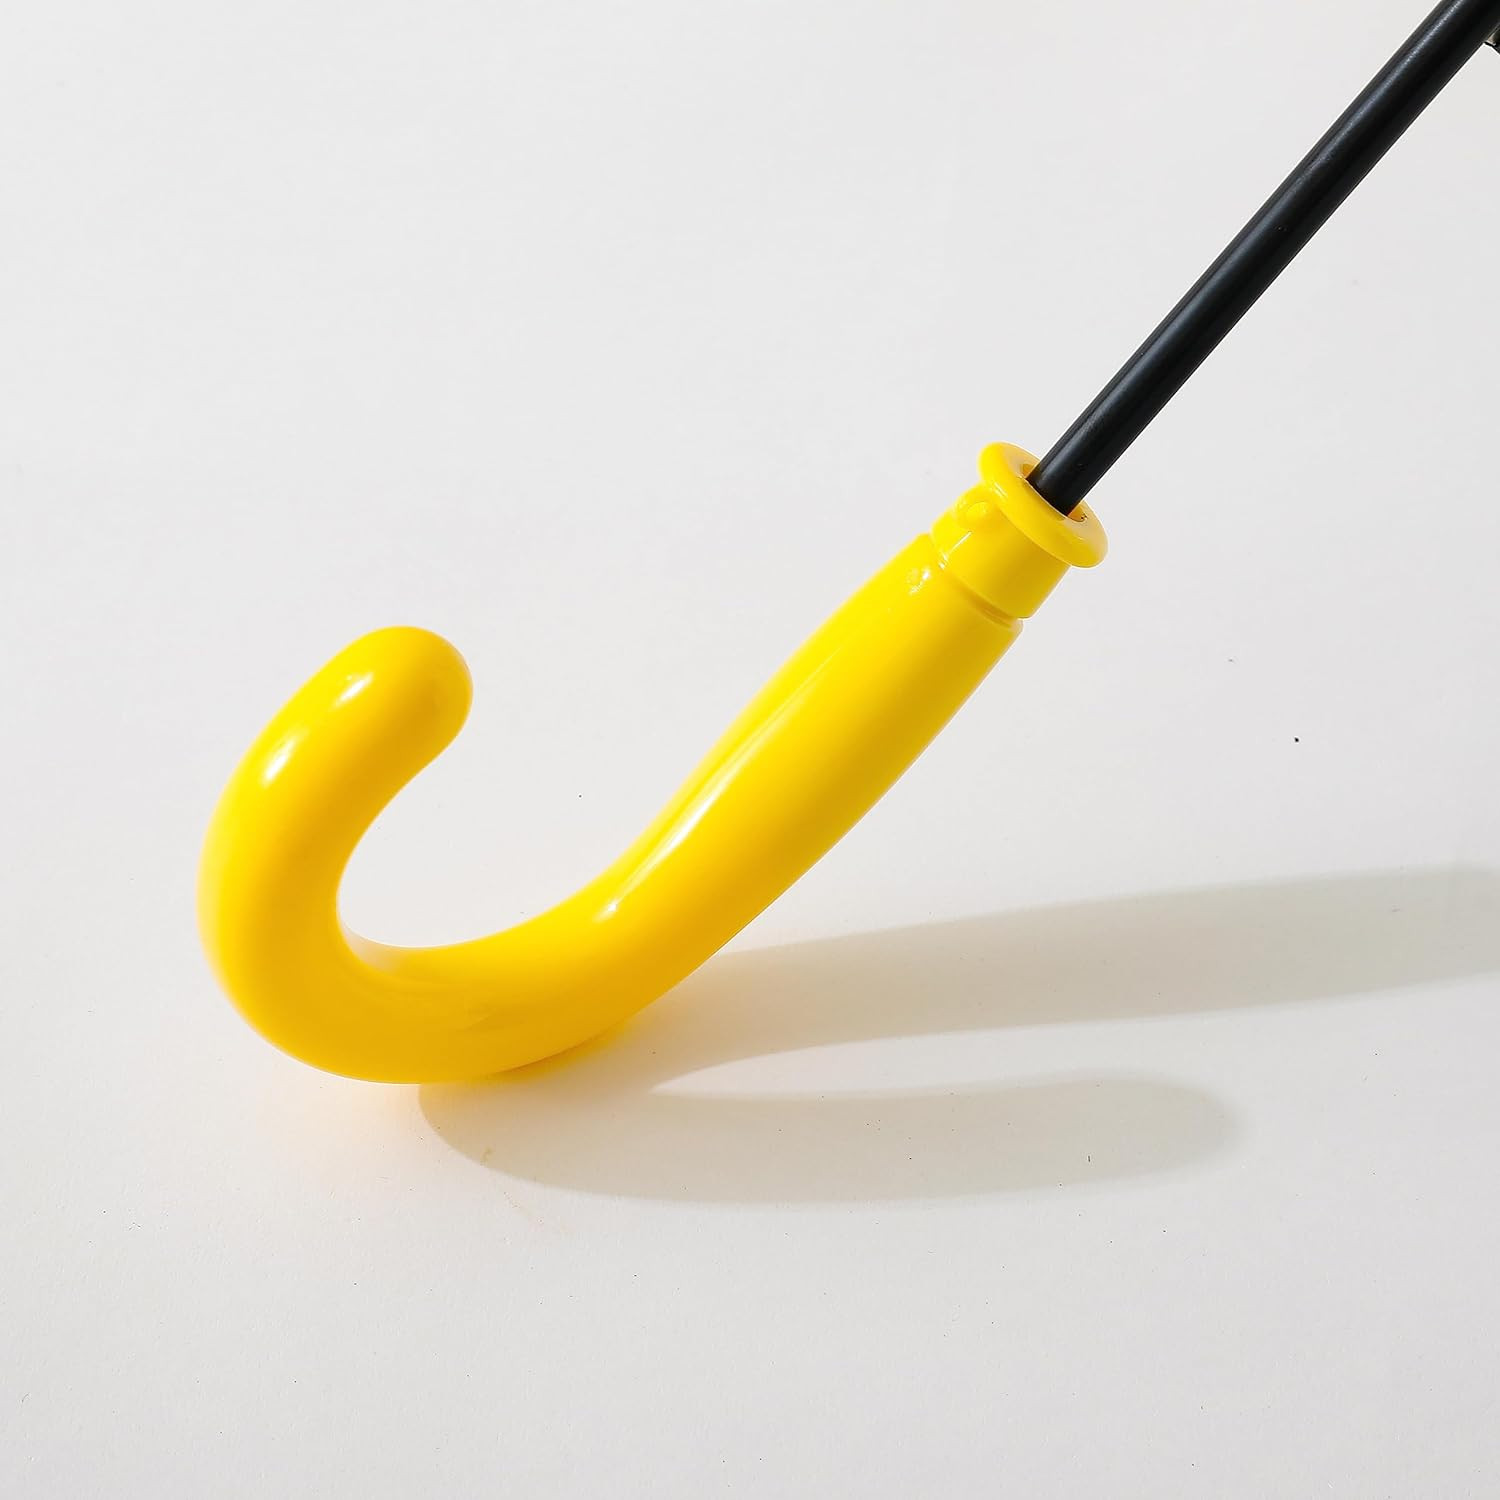 Kuber Industries Transparent Umbrella For Men & Women|Automatic Umbrella For Rain (Yellow)